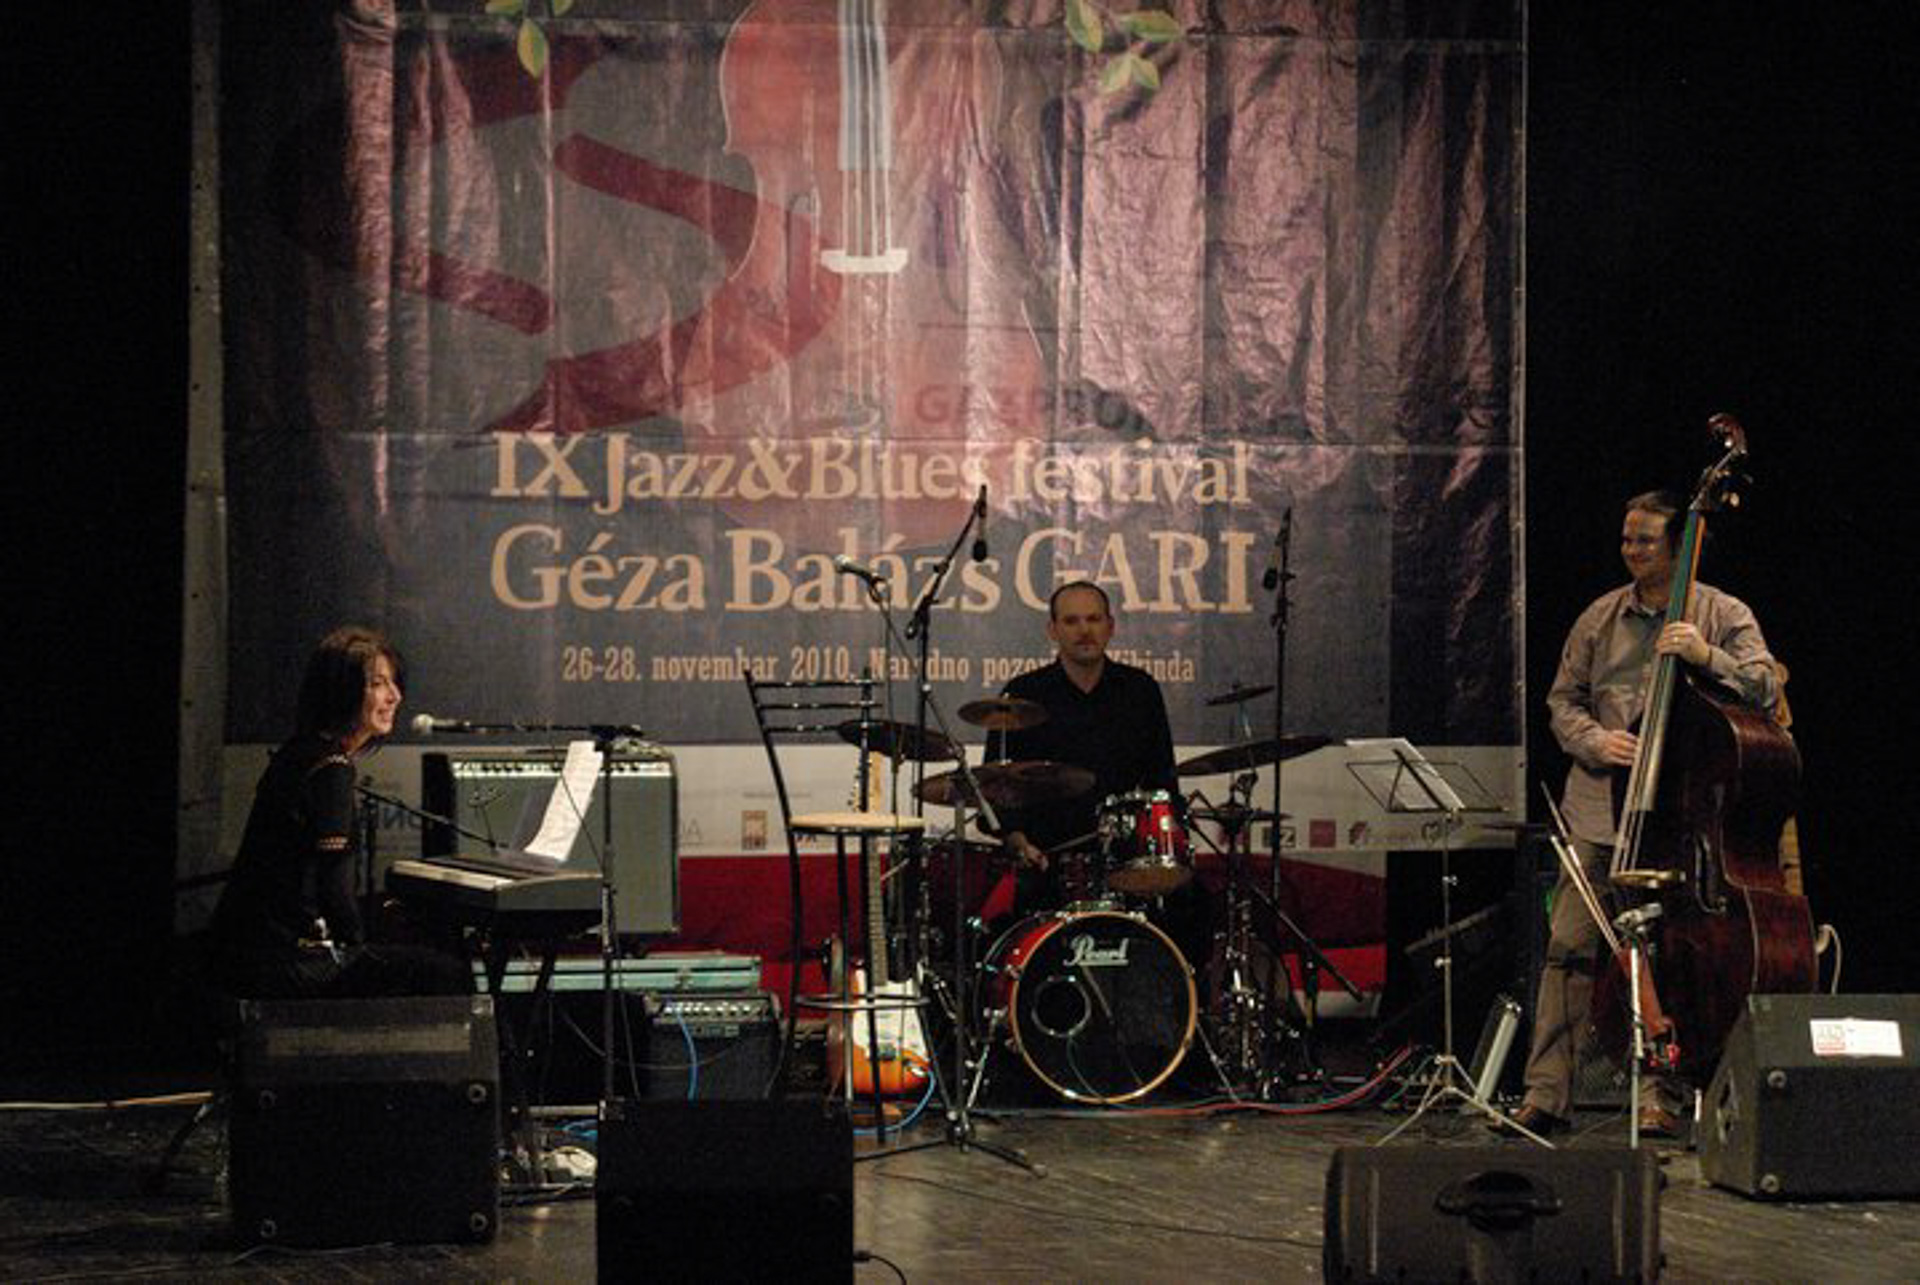 Blues and jazz festival Geza Balasz - Gari, Kikinda 2010.